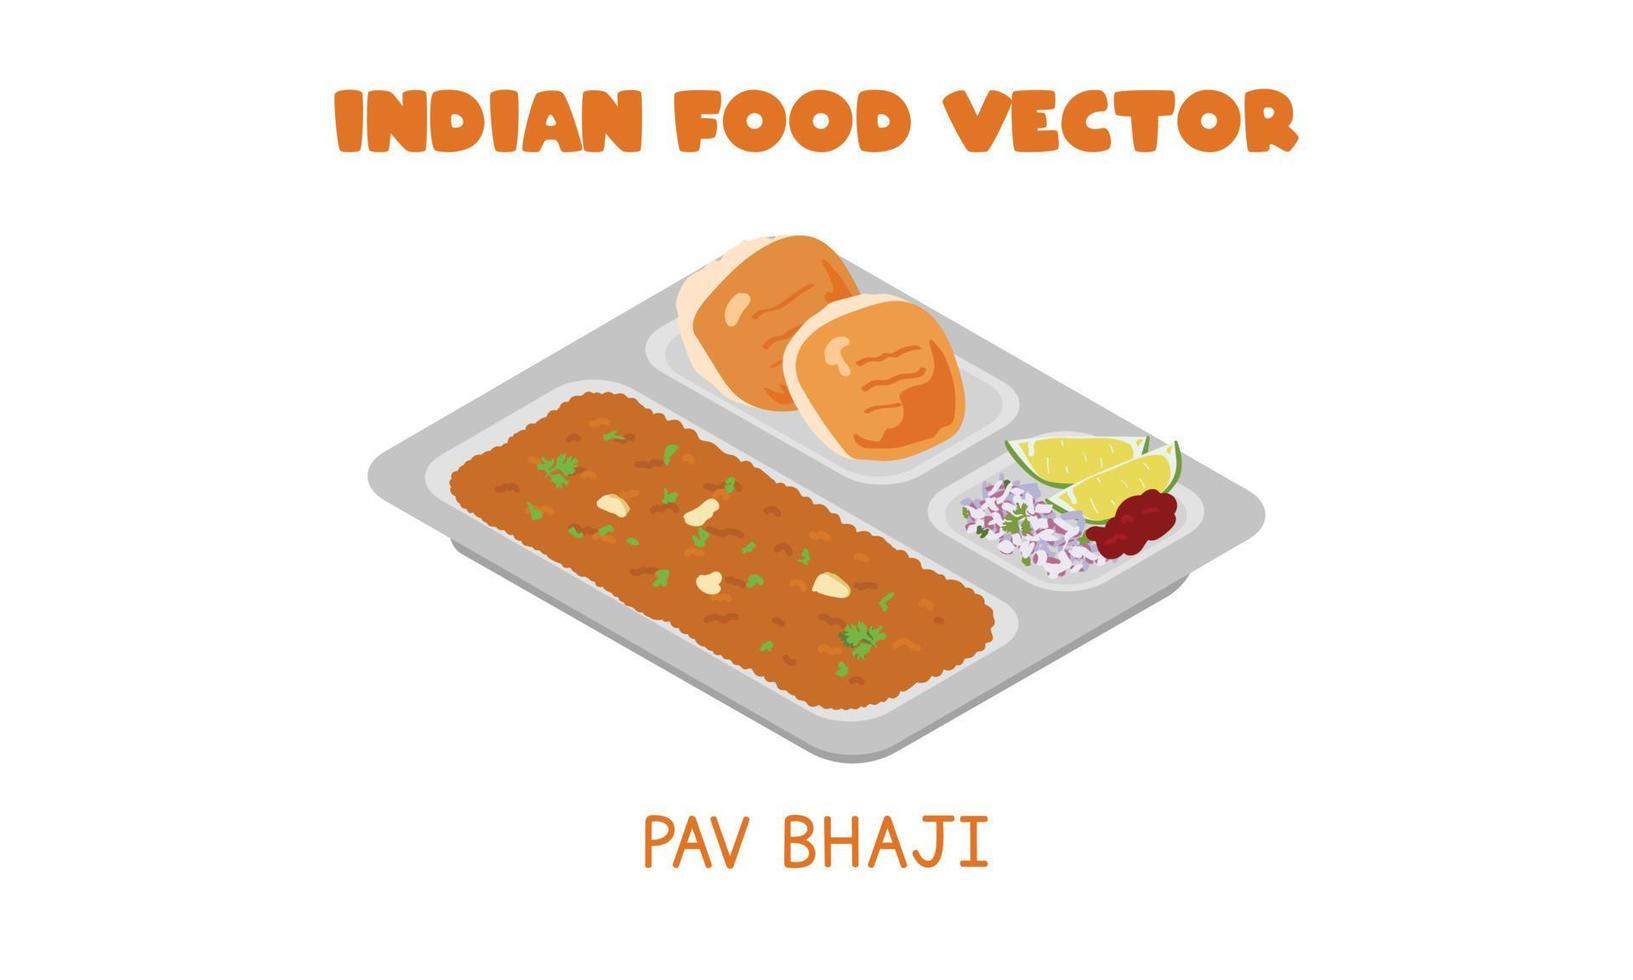 indisches pav bhaji - mumbai street style pav bhaji fast food flache vektorillustration isoliert auf weißem hintergrund, clipart-cartoon-stil. asiatisches Essen. indische Küche. Indisches Essen vektor